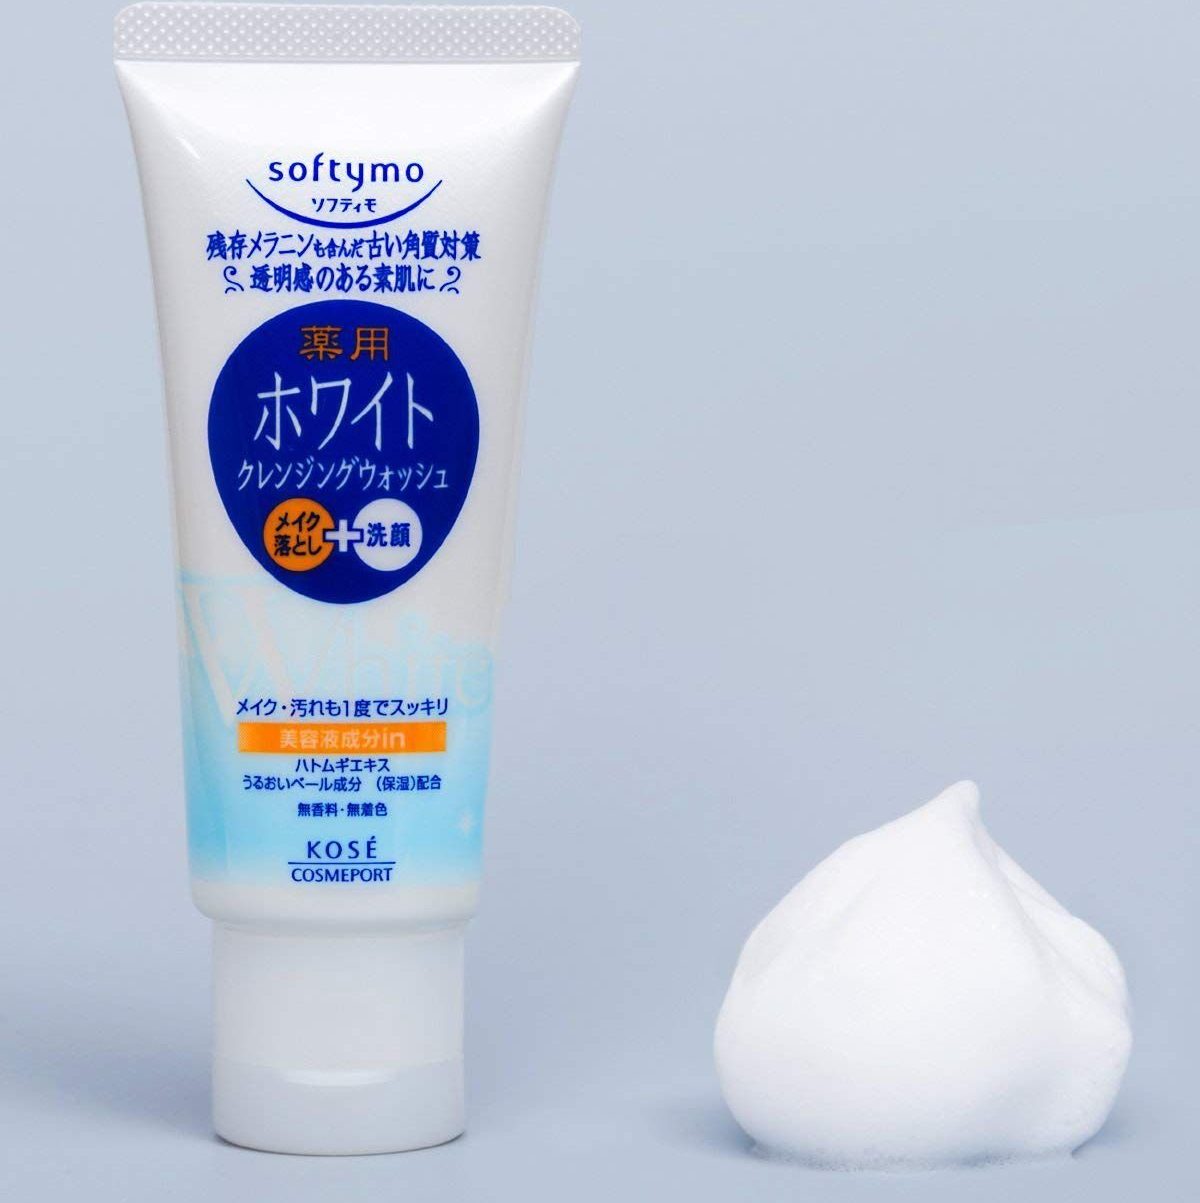 Kose Cosmeport Softymo Cleansing Foam White